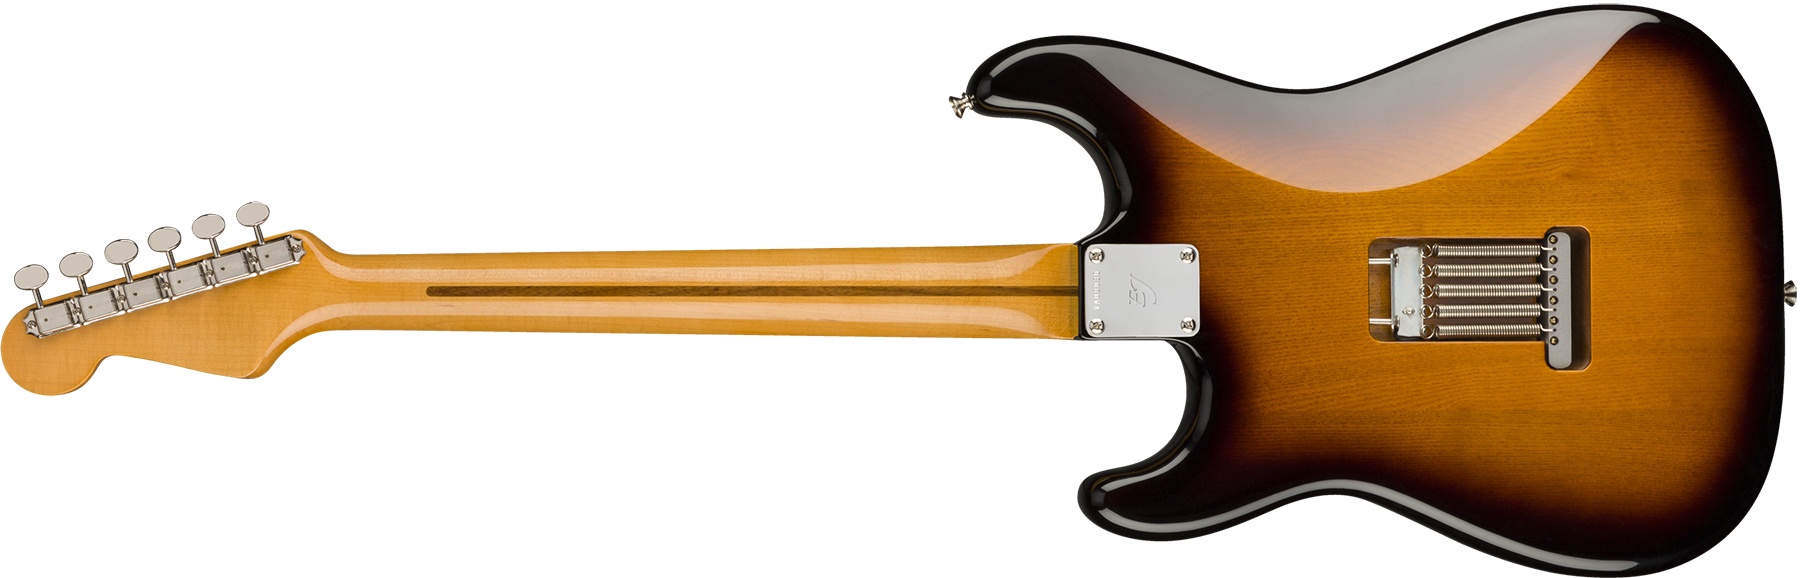 Fender Eric Johnson Strat 1954 Virginia Stories Collection Usa Signature Mn - 2-color Sunburst - Str shape electric guitar - Variation 1